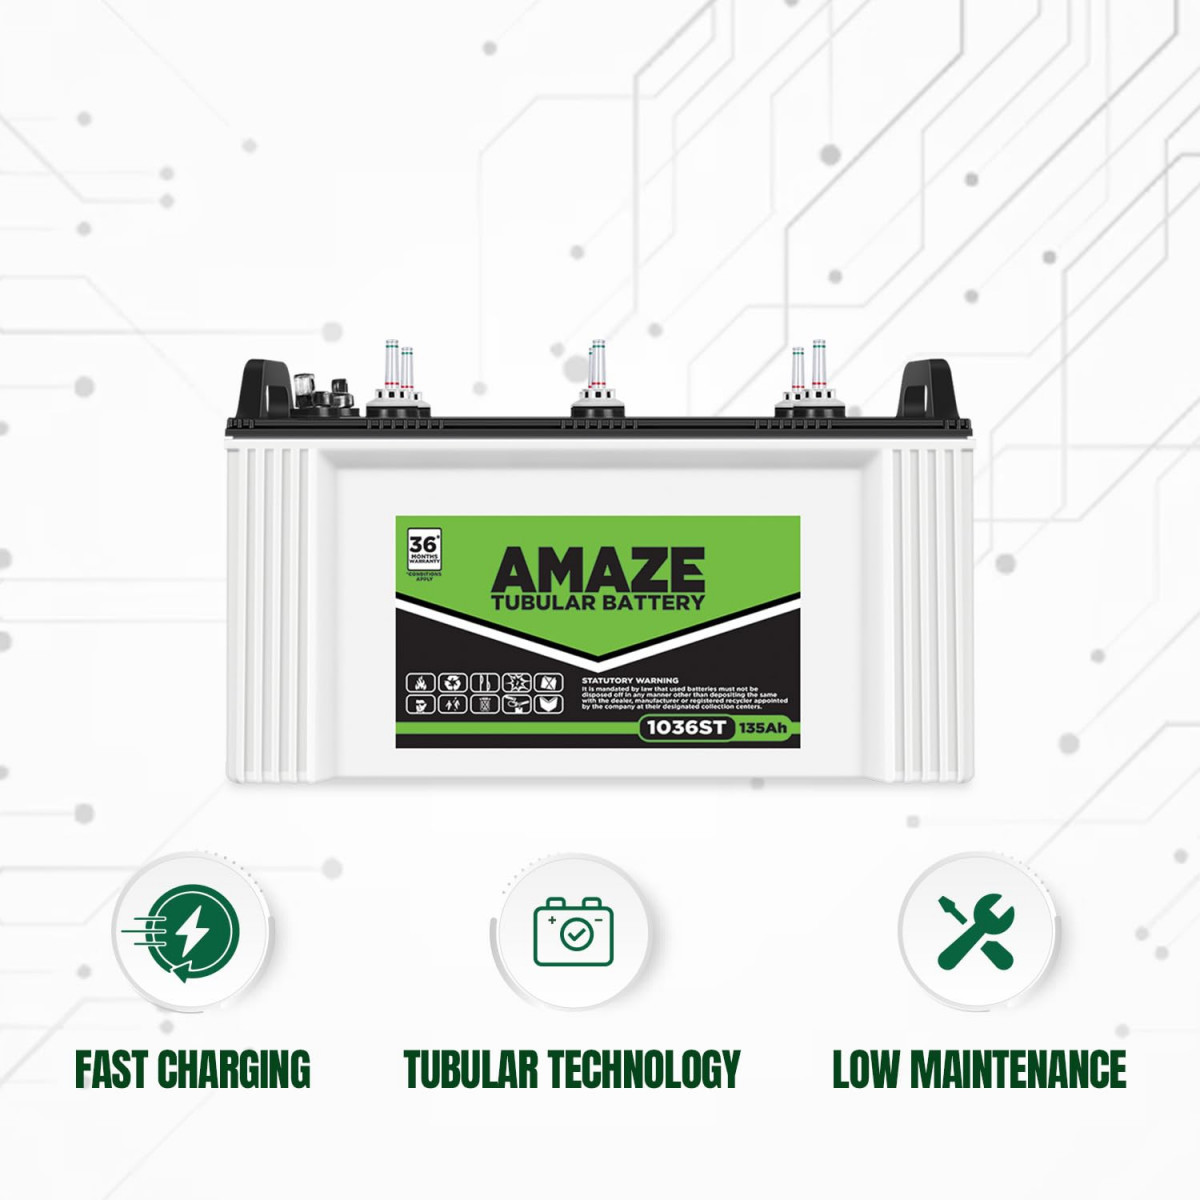 Amaze 1036ST 135Ah Short Tubular Battery for Home Office  Shops